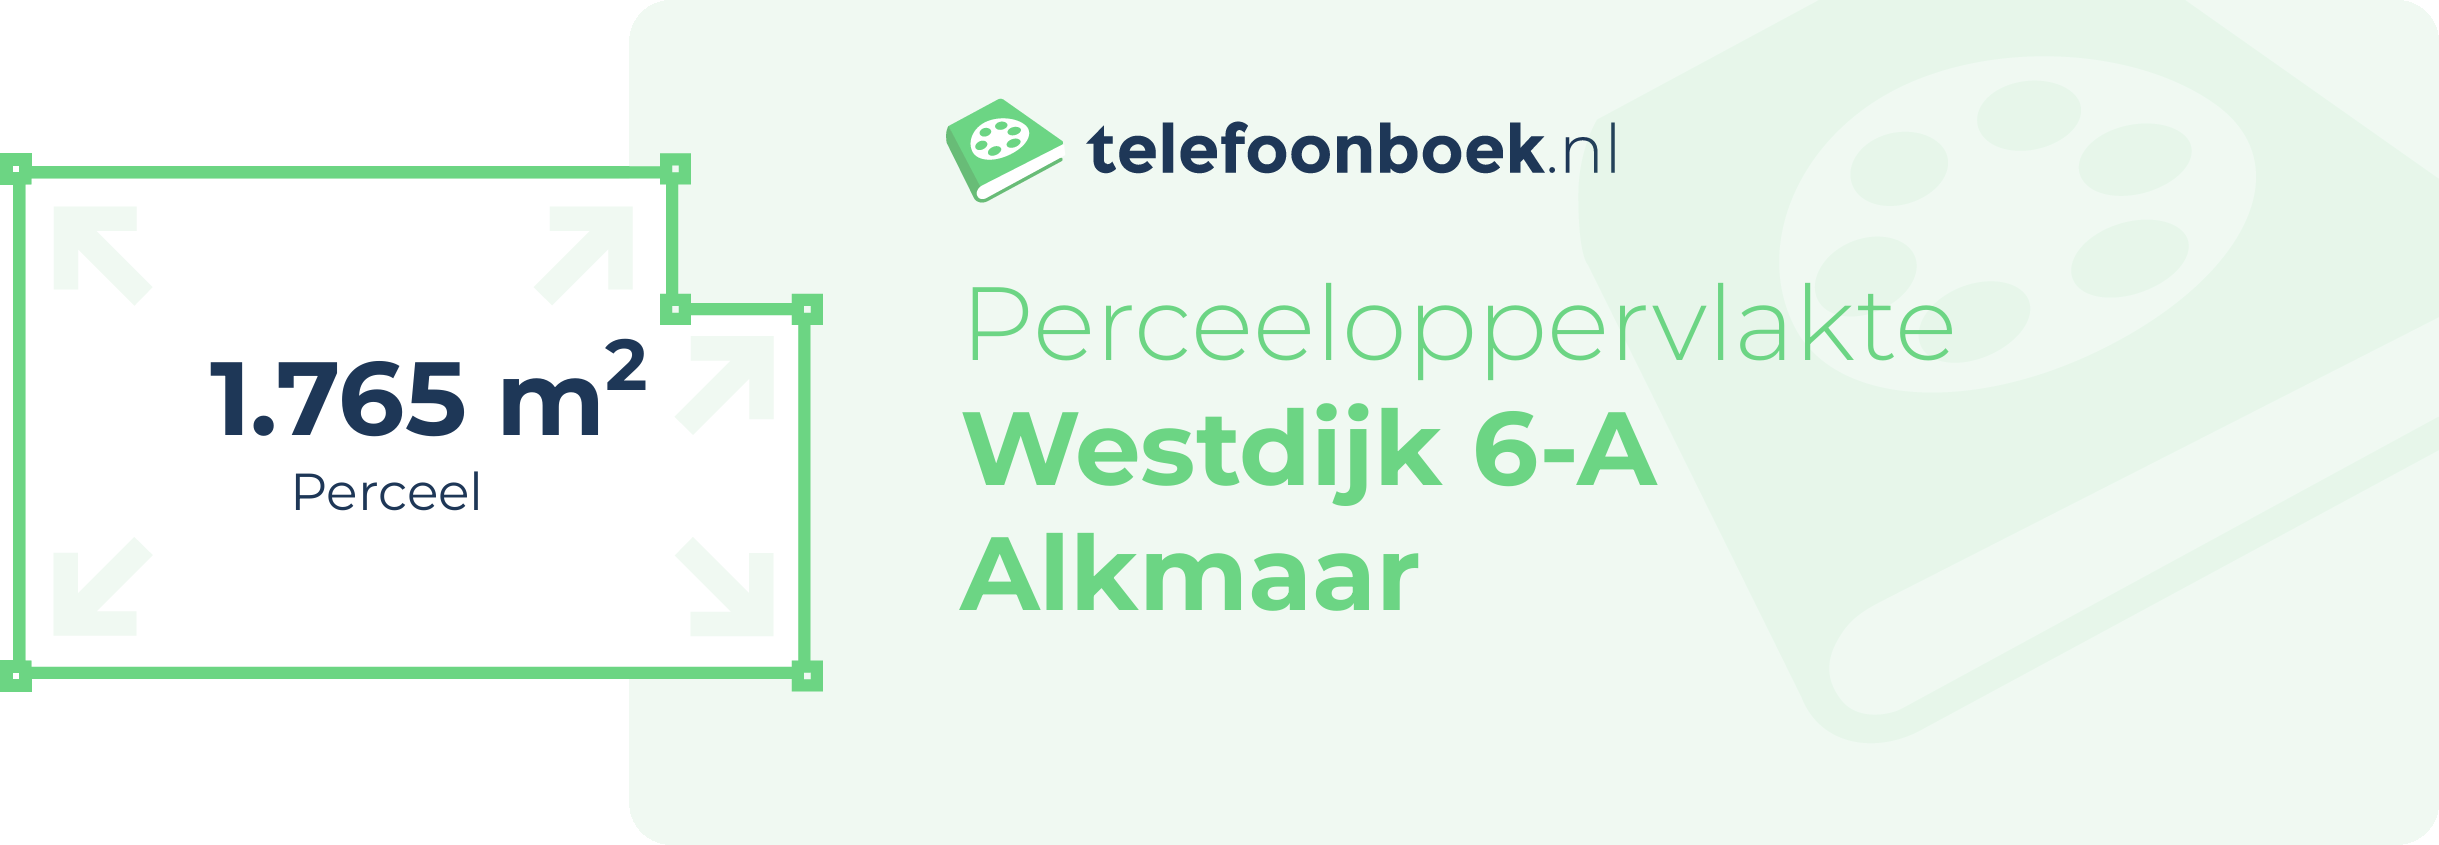 Perceeloppervlakte Westdijk 6-A Alkmaar